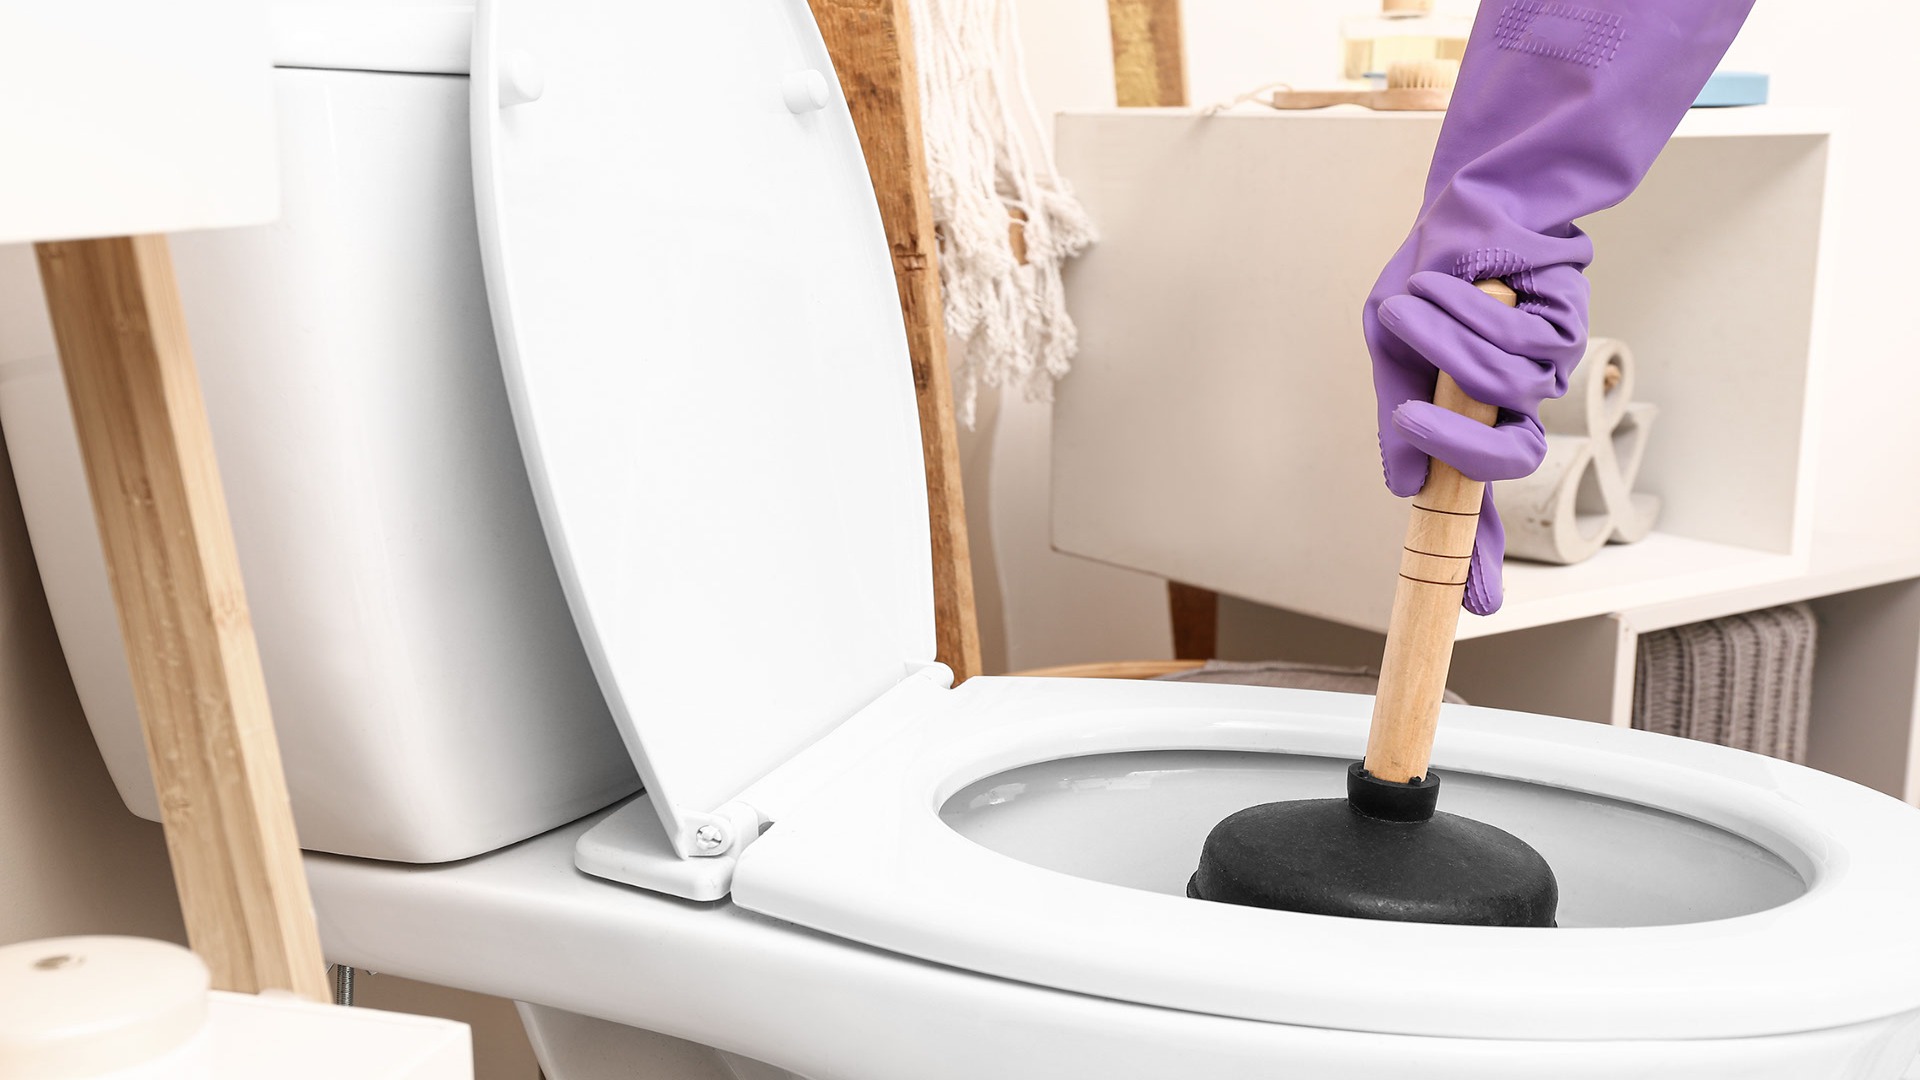 Using Plunger Unclog Toilet Bowl